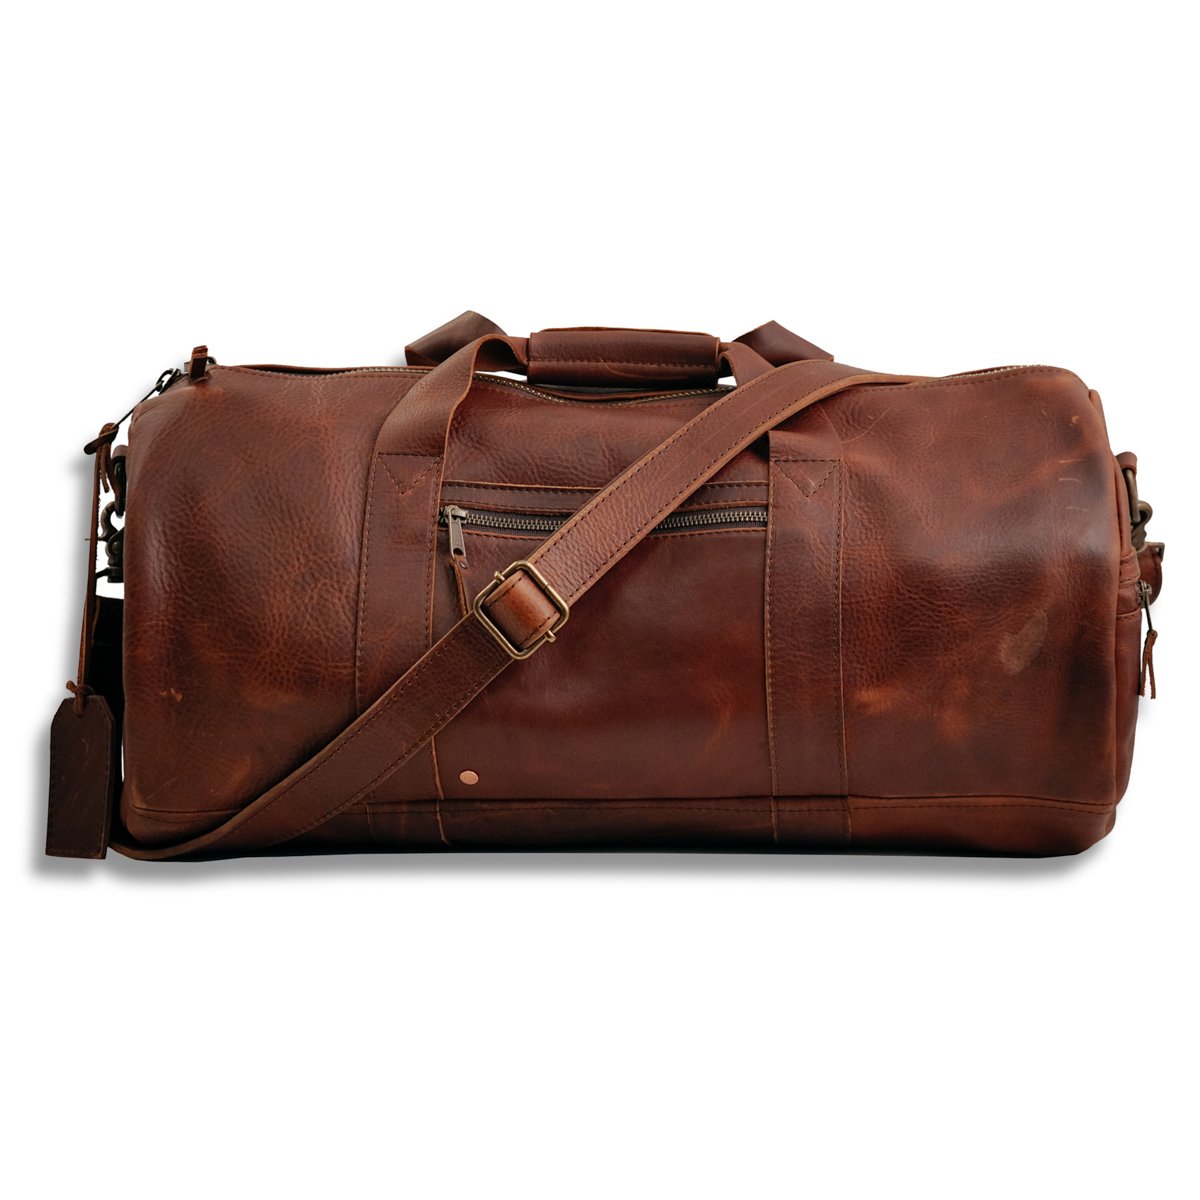 Tahoe Leather Travel Duffle Bag